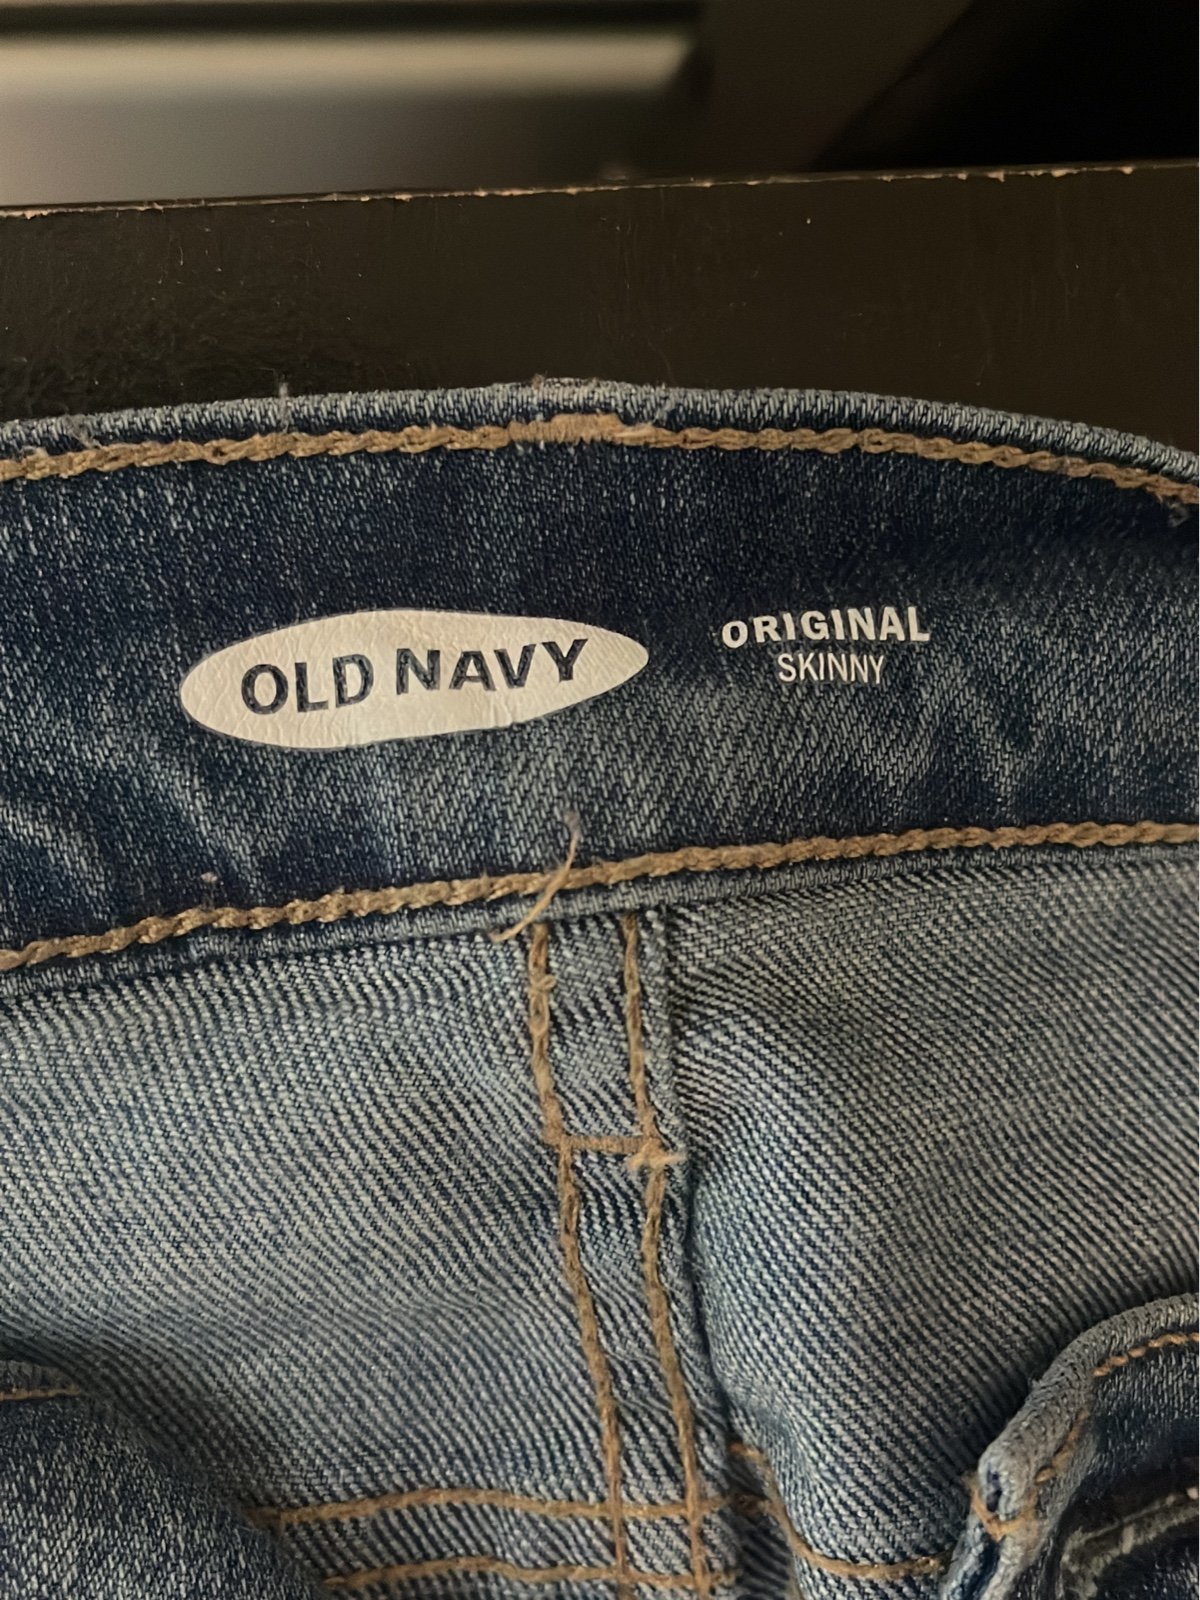 Buy Old navy skinny jeans jXUYz9A0Y Factory Price